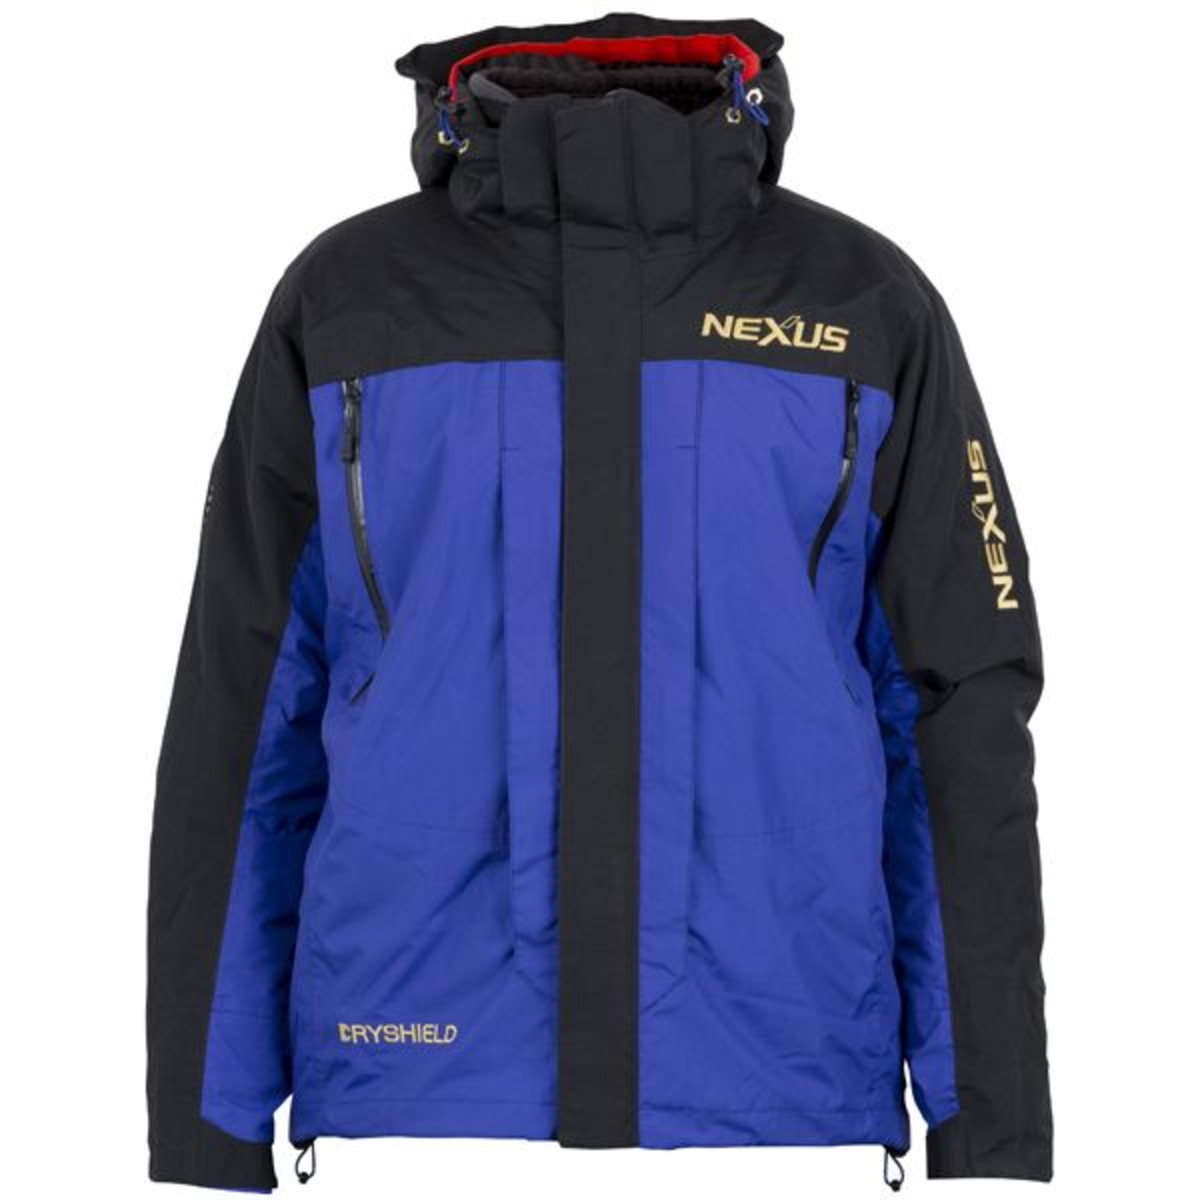 Shimano Nexus Dryshield Advance Cold Weather Jacket - Deep Blue - L